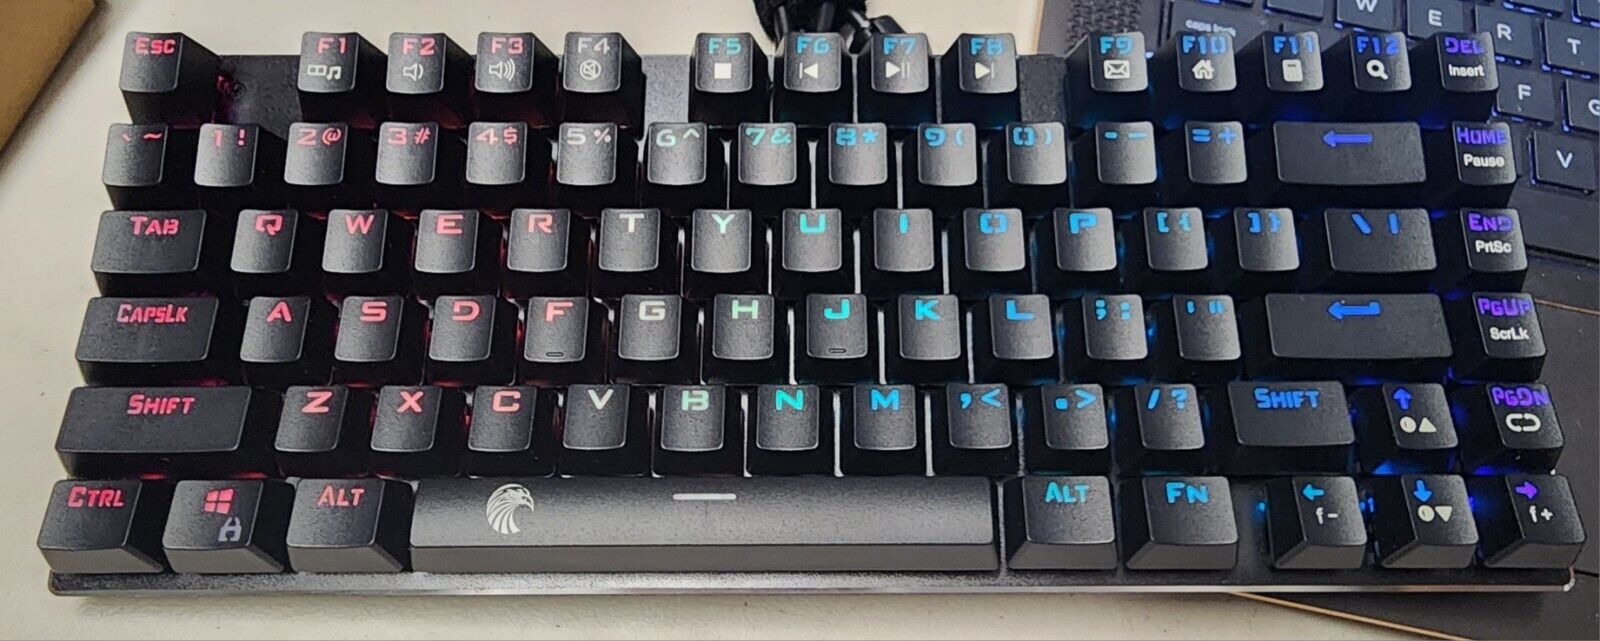 E-Yooso Super Scholar/Z-88 Black 81 Keys RGB Mechanical Gaming Keyboard